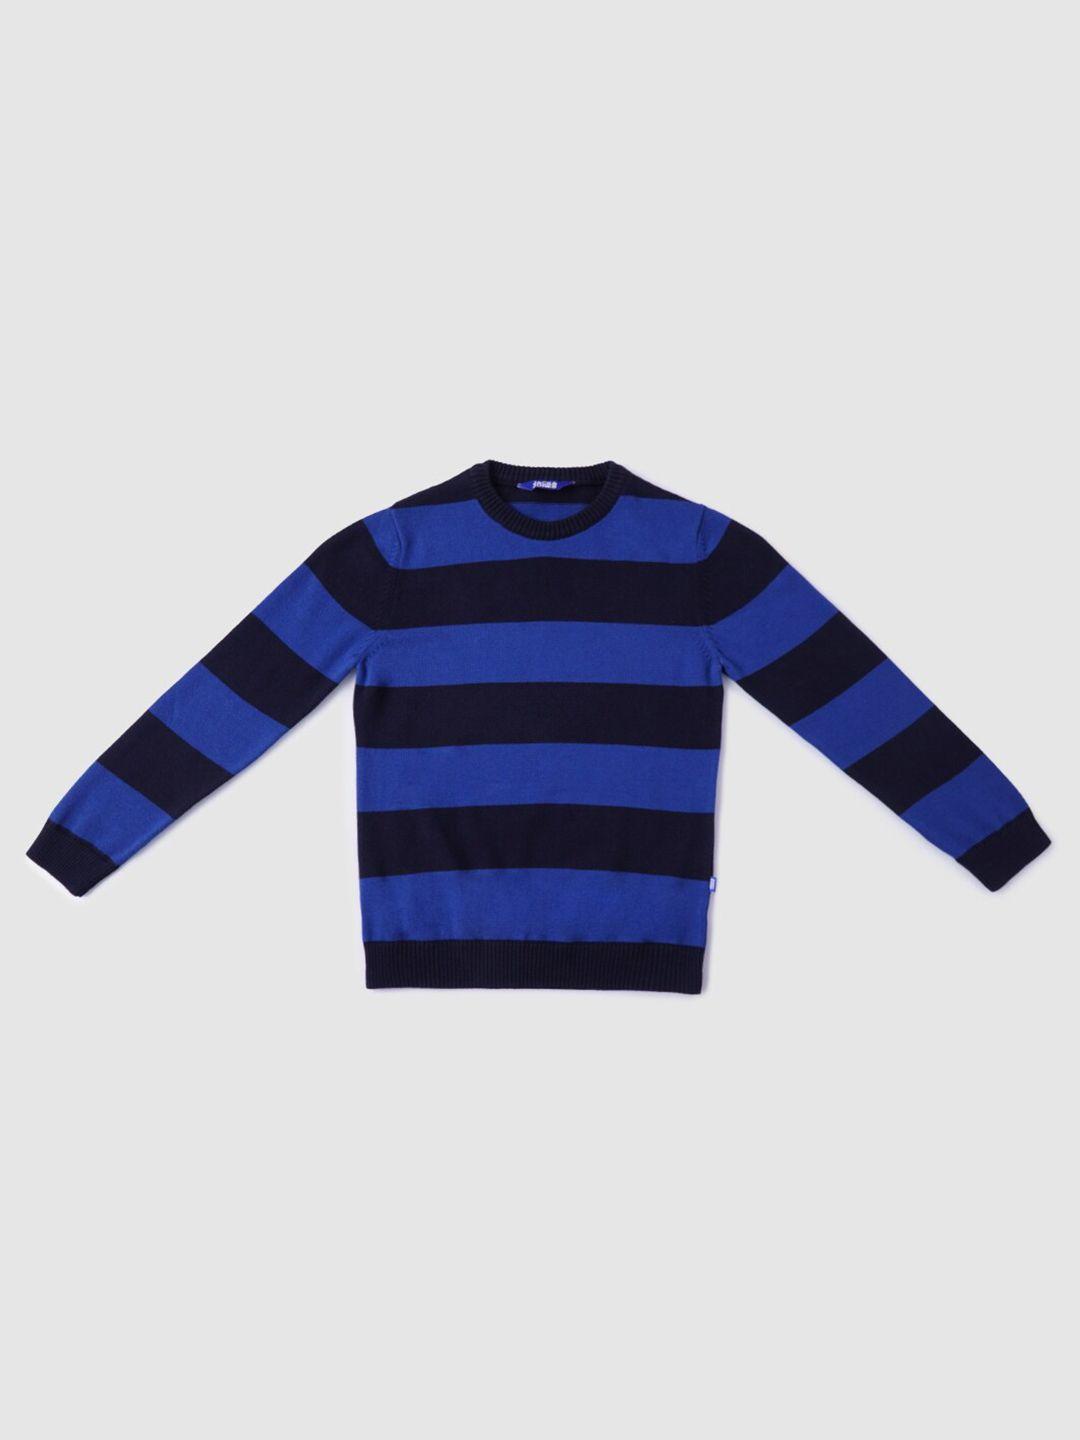 jack & jones boys blue & black striped cotton pullover